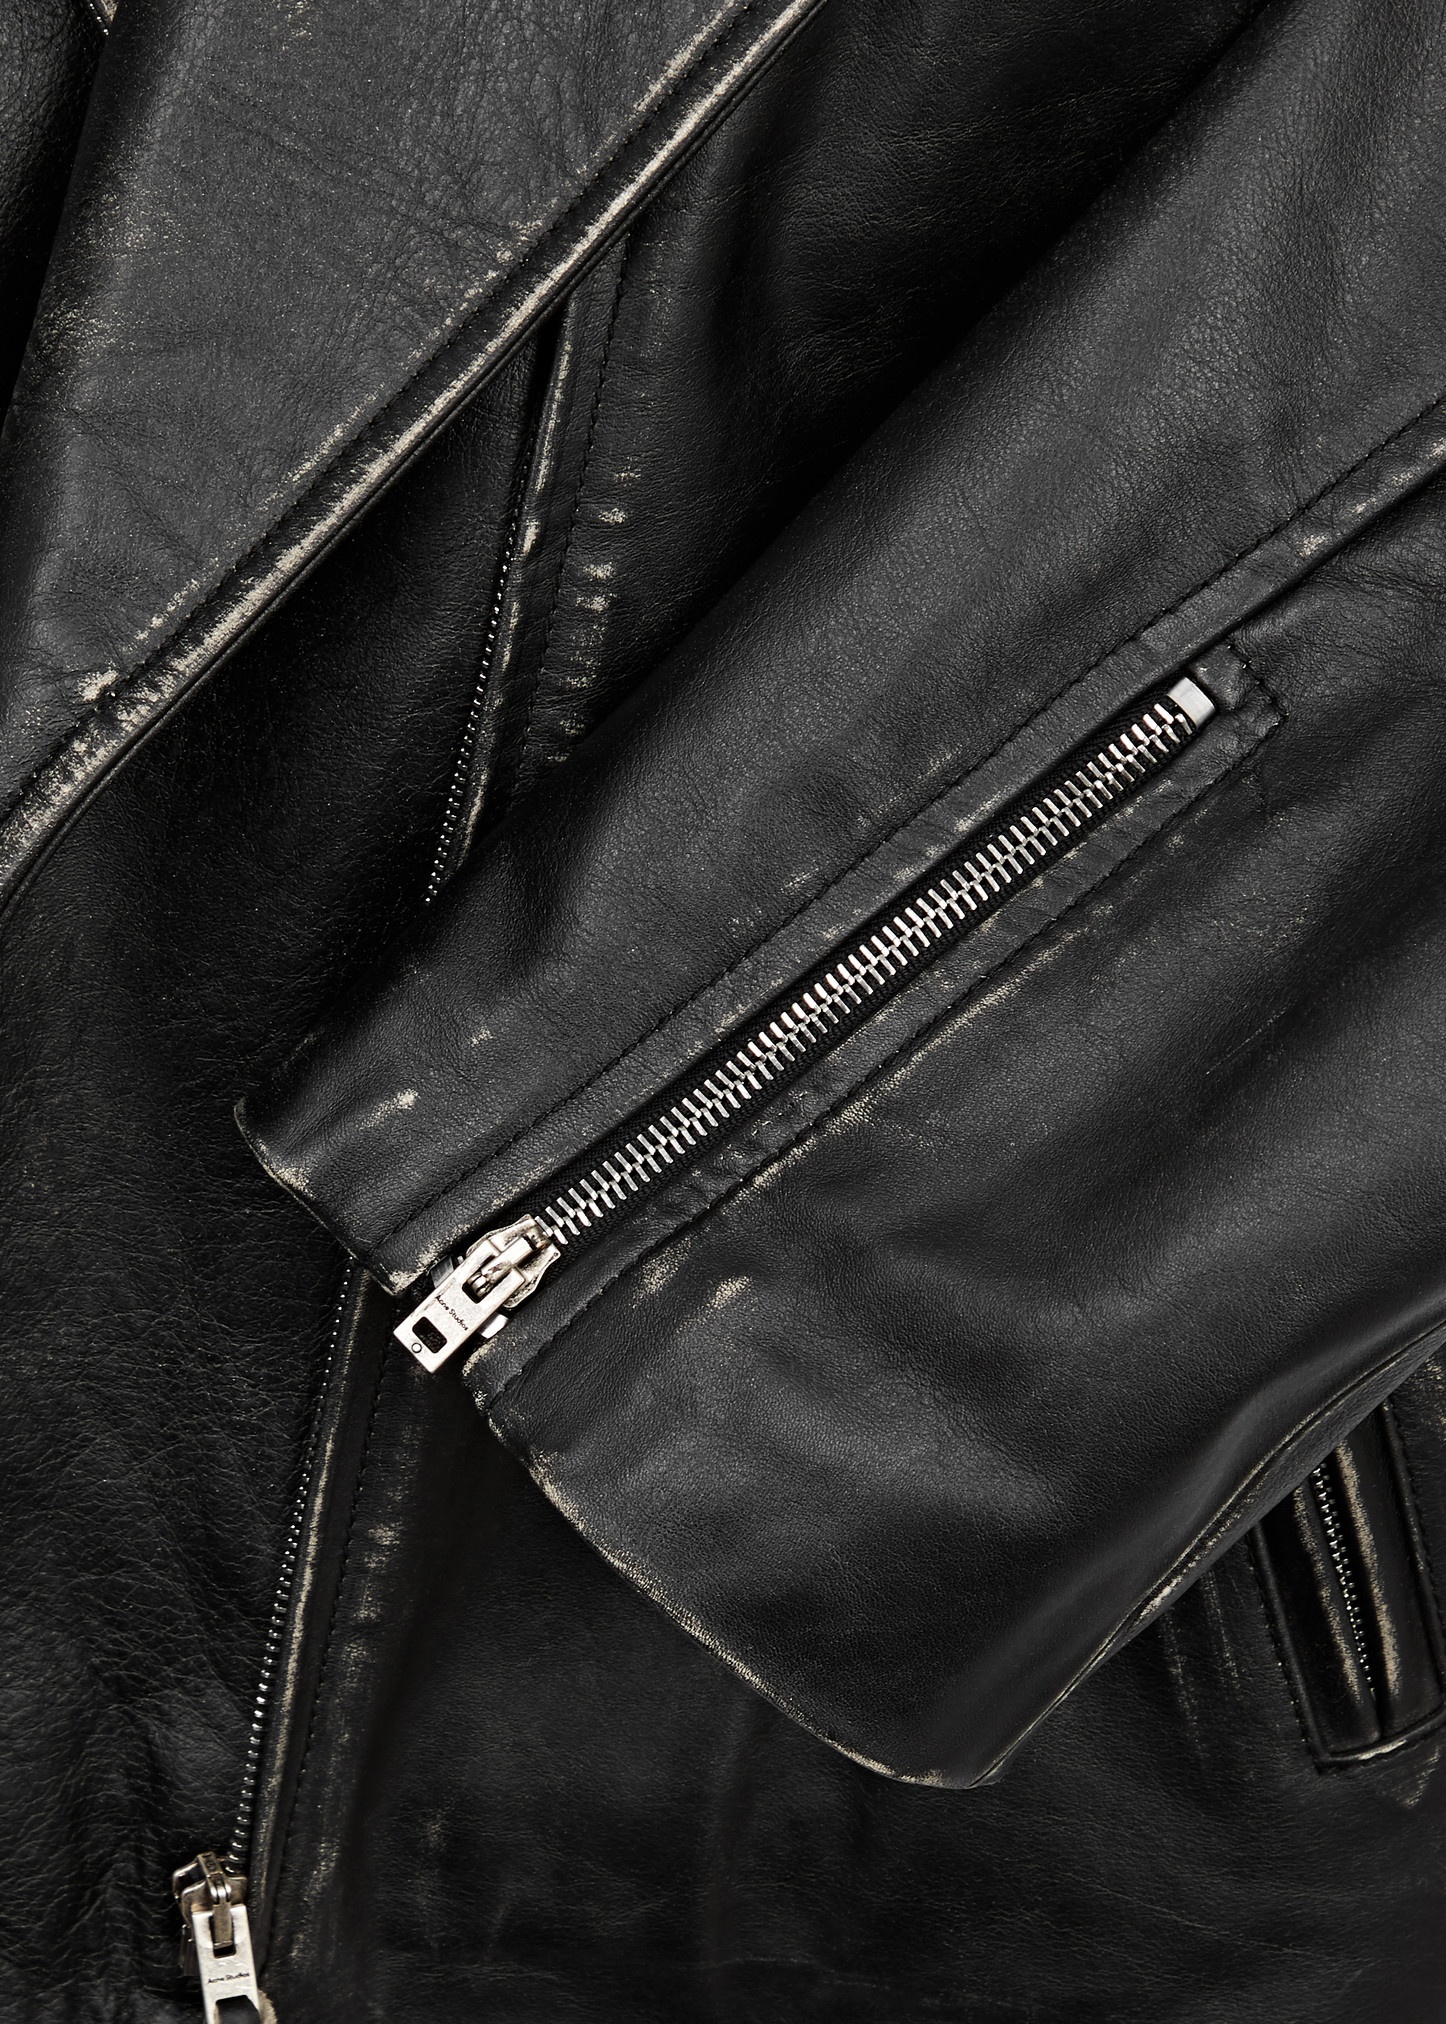 Distressed leather jacket - 5